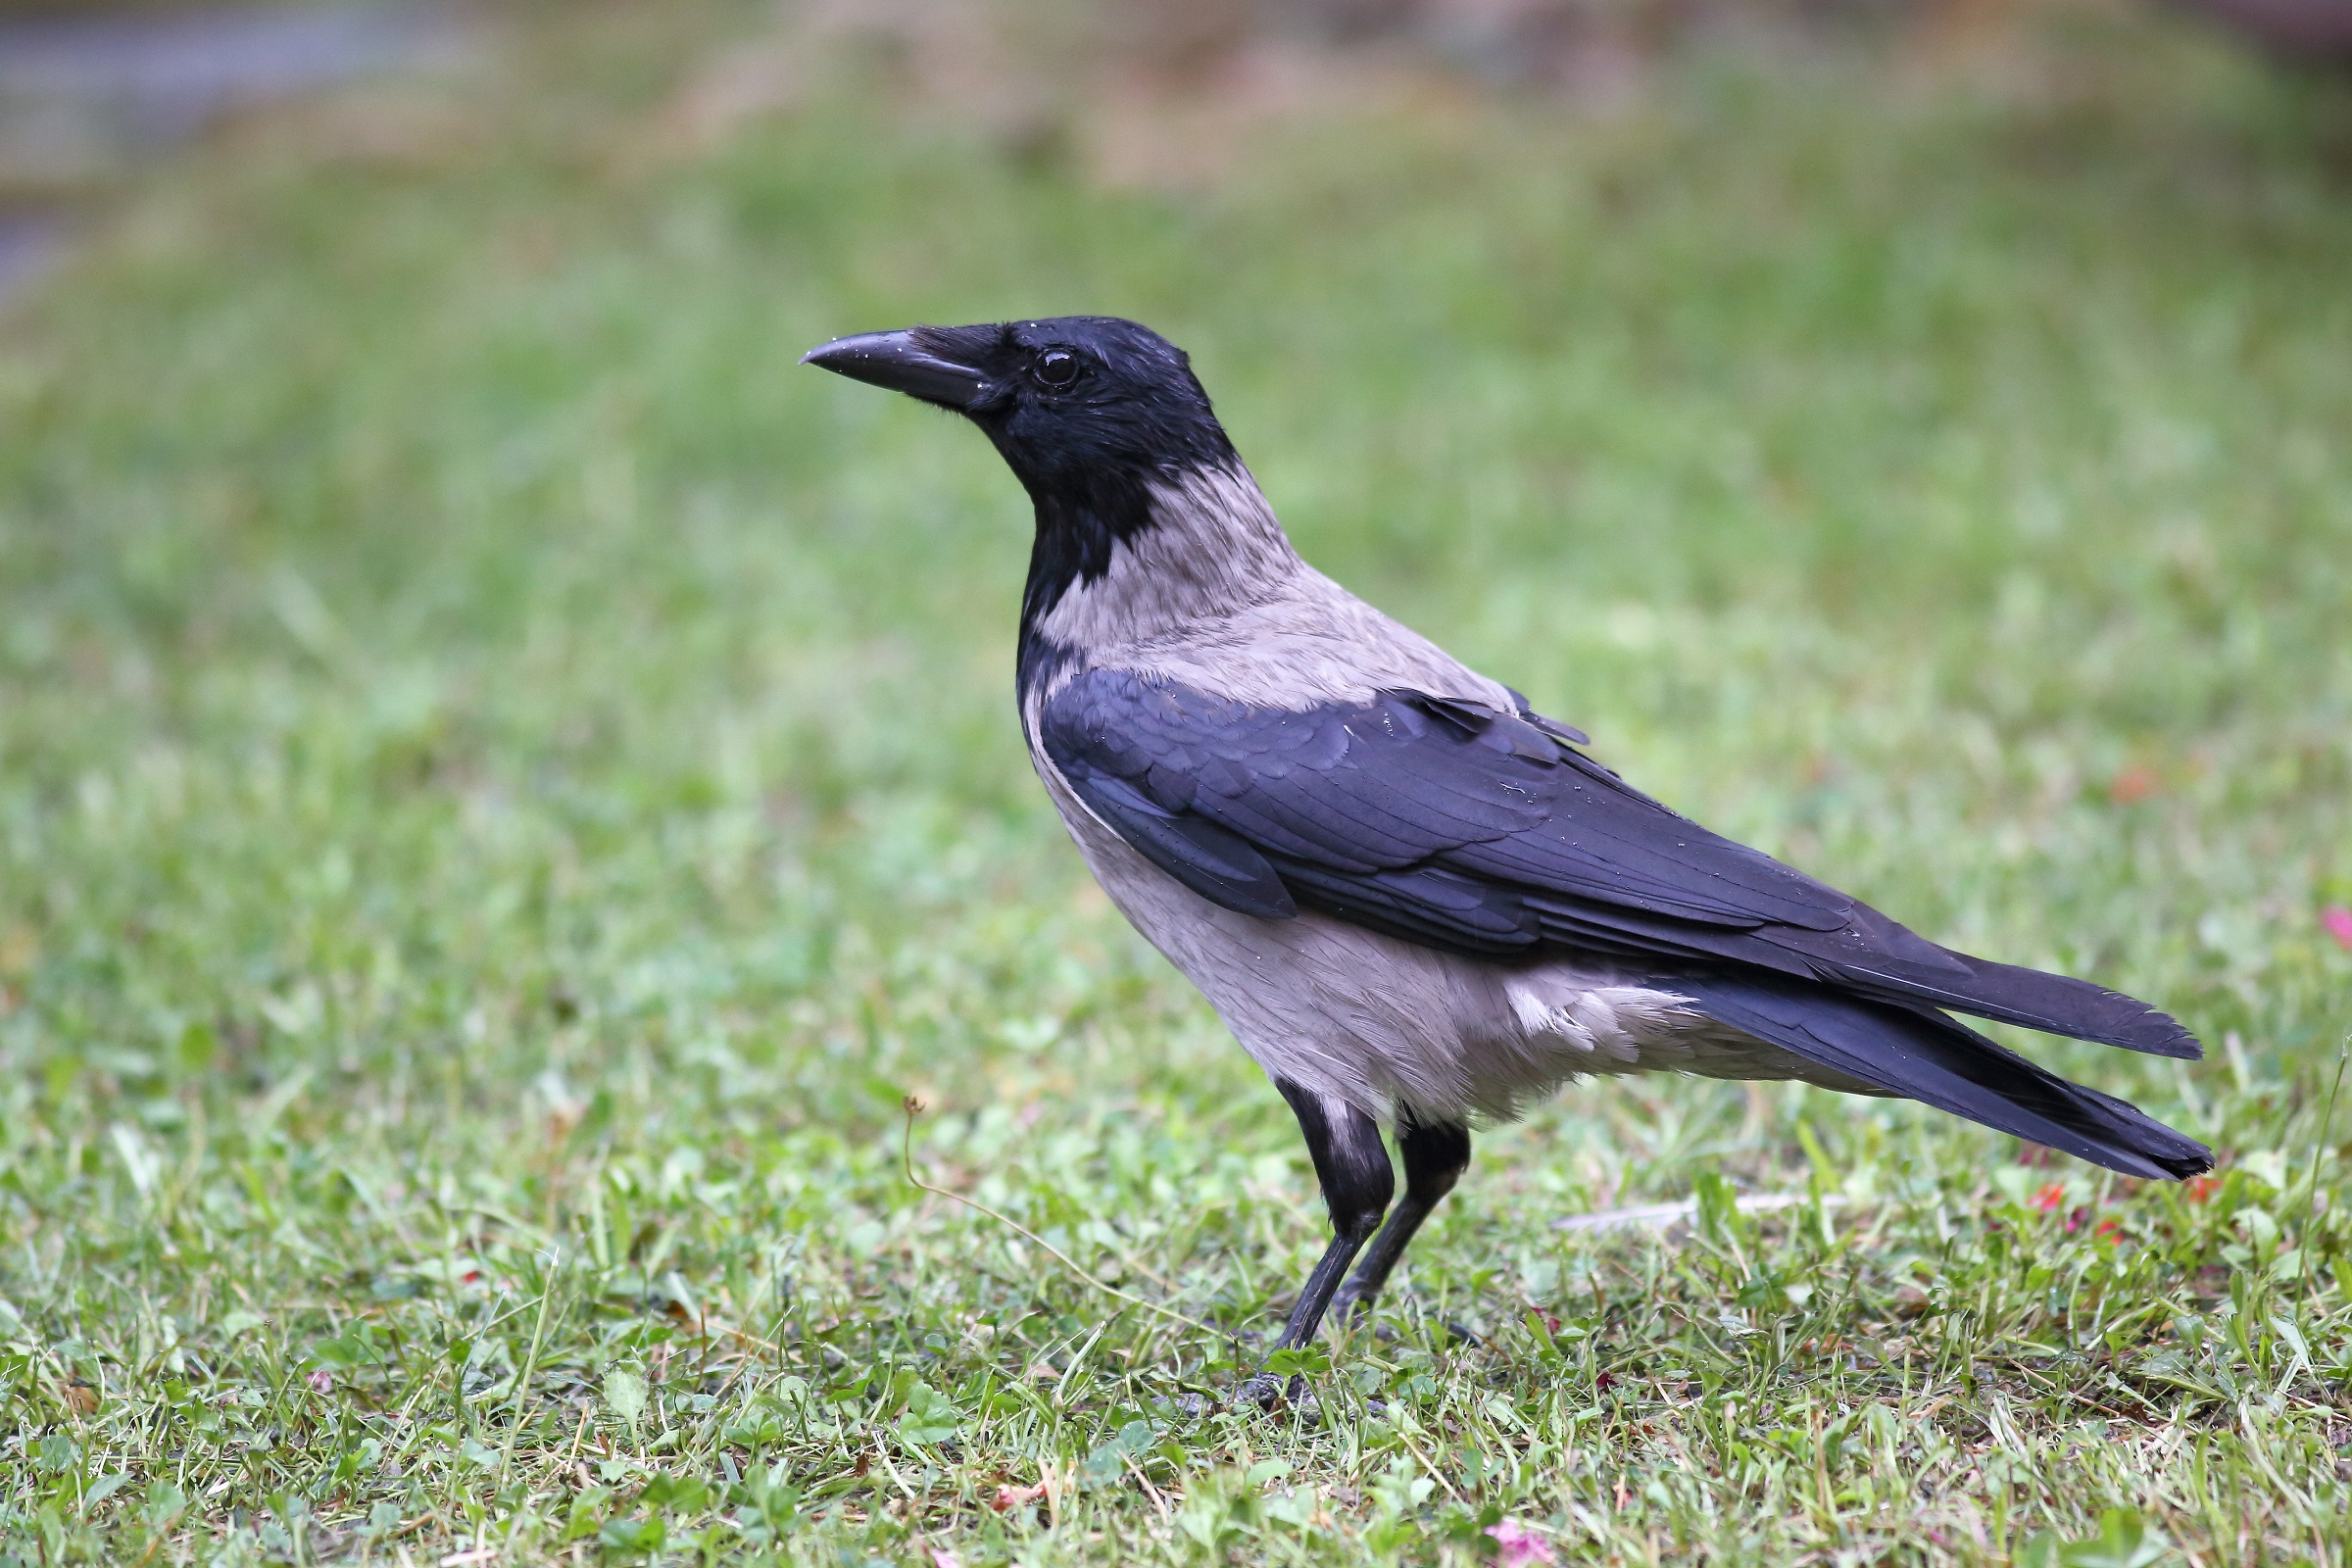 Corvus cornix or grey crow...